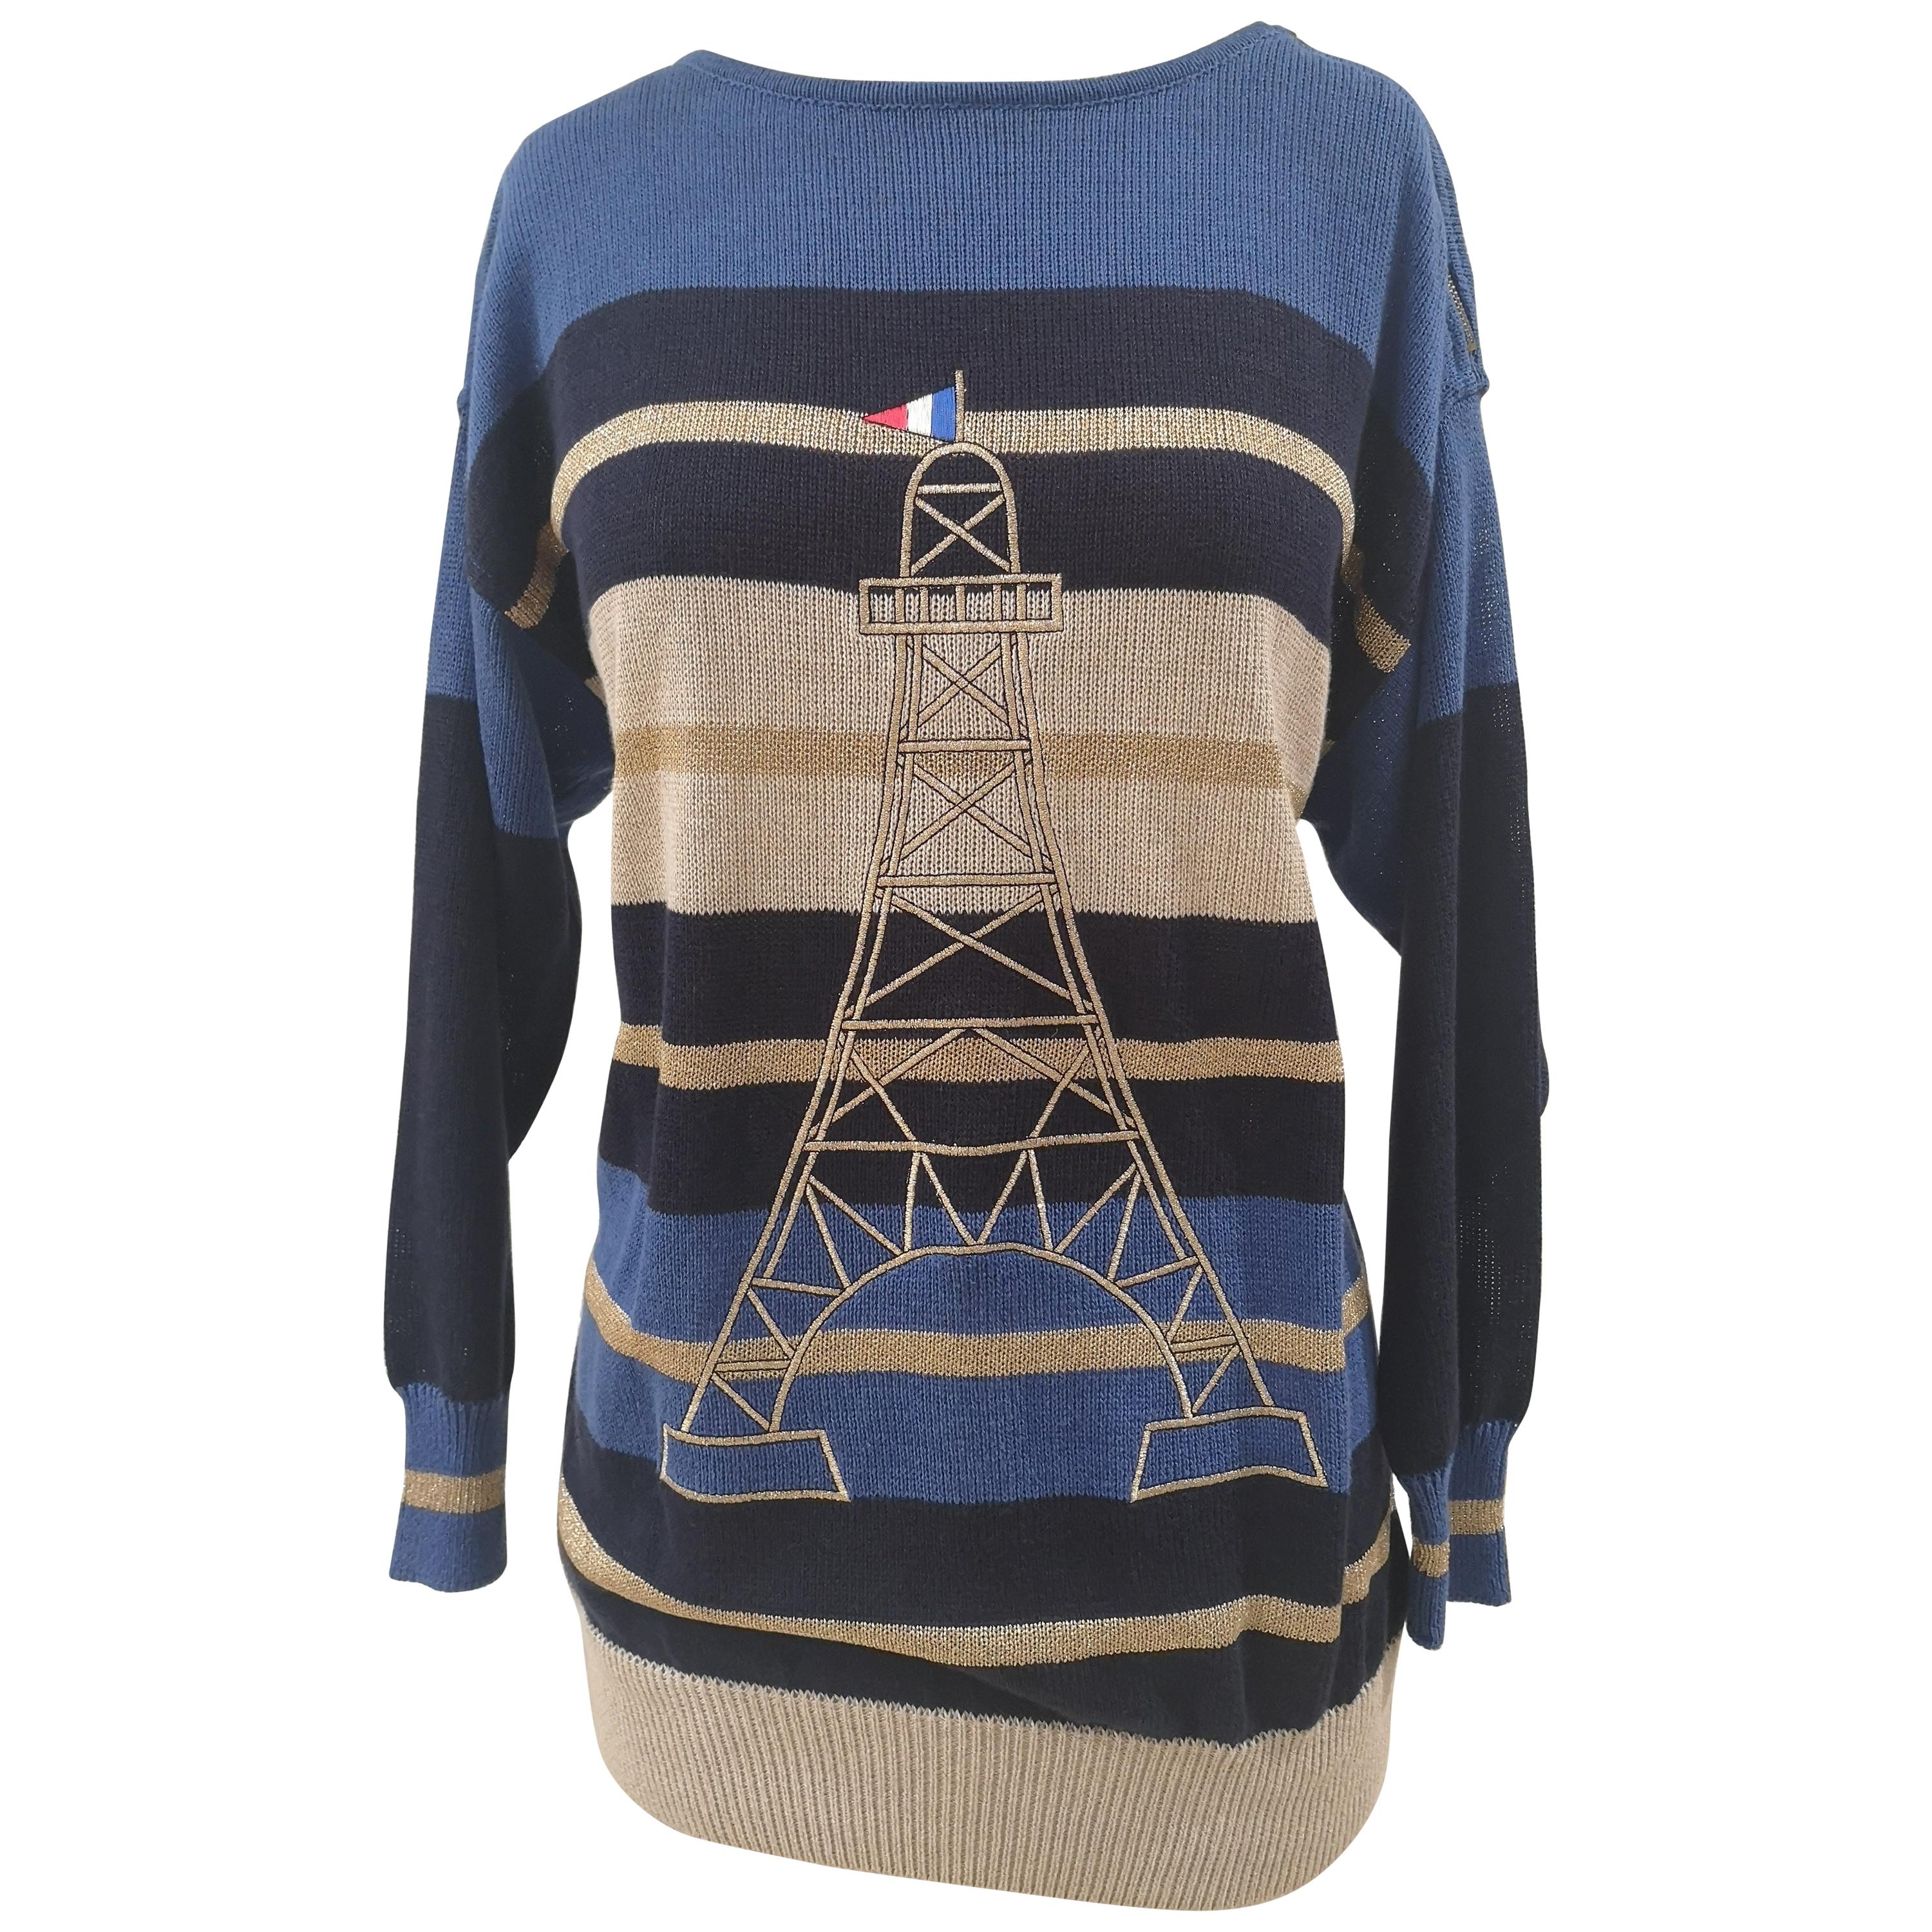 Jean Charles de Castelbajac blue tour Eiffel sweater NWOT